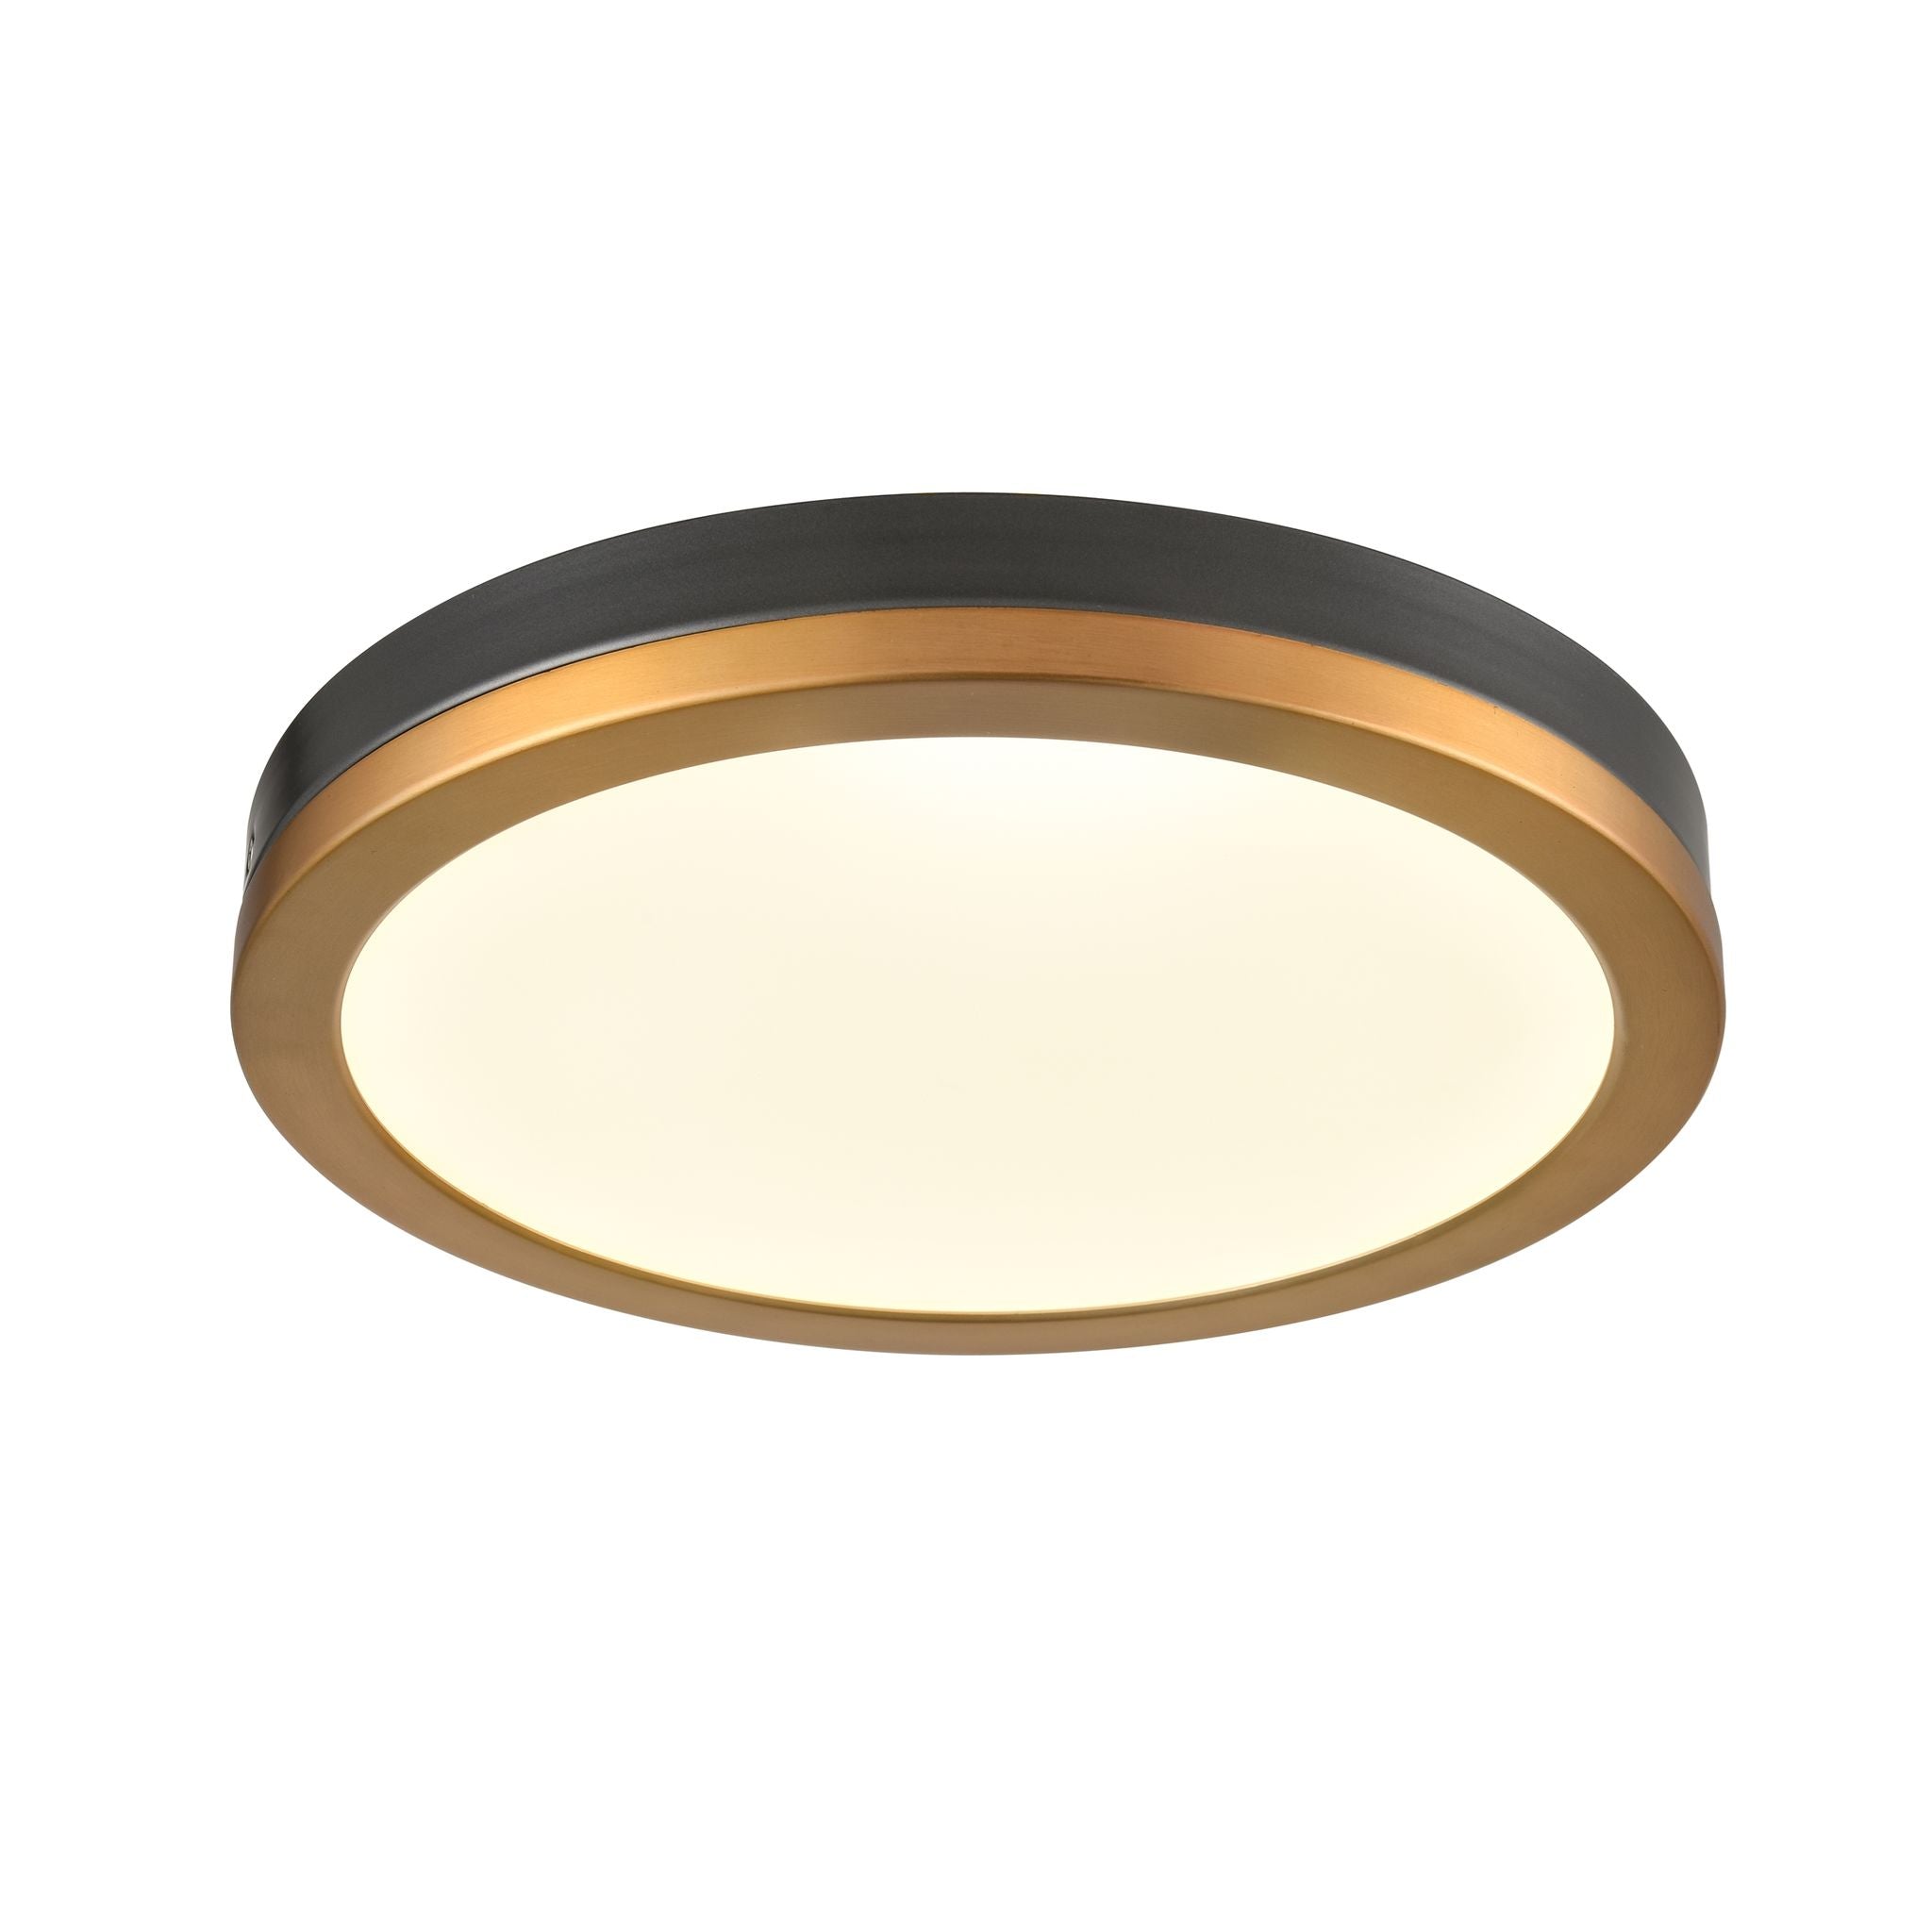 Temagami AC LED Flush mount Gold, Graphite INTEGRATED LED - DVP39342BR+GR | DVI